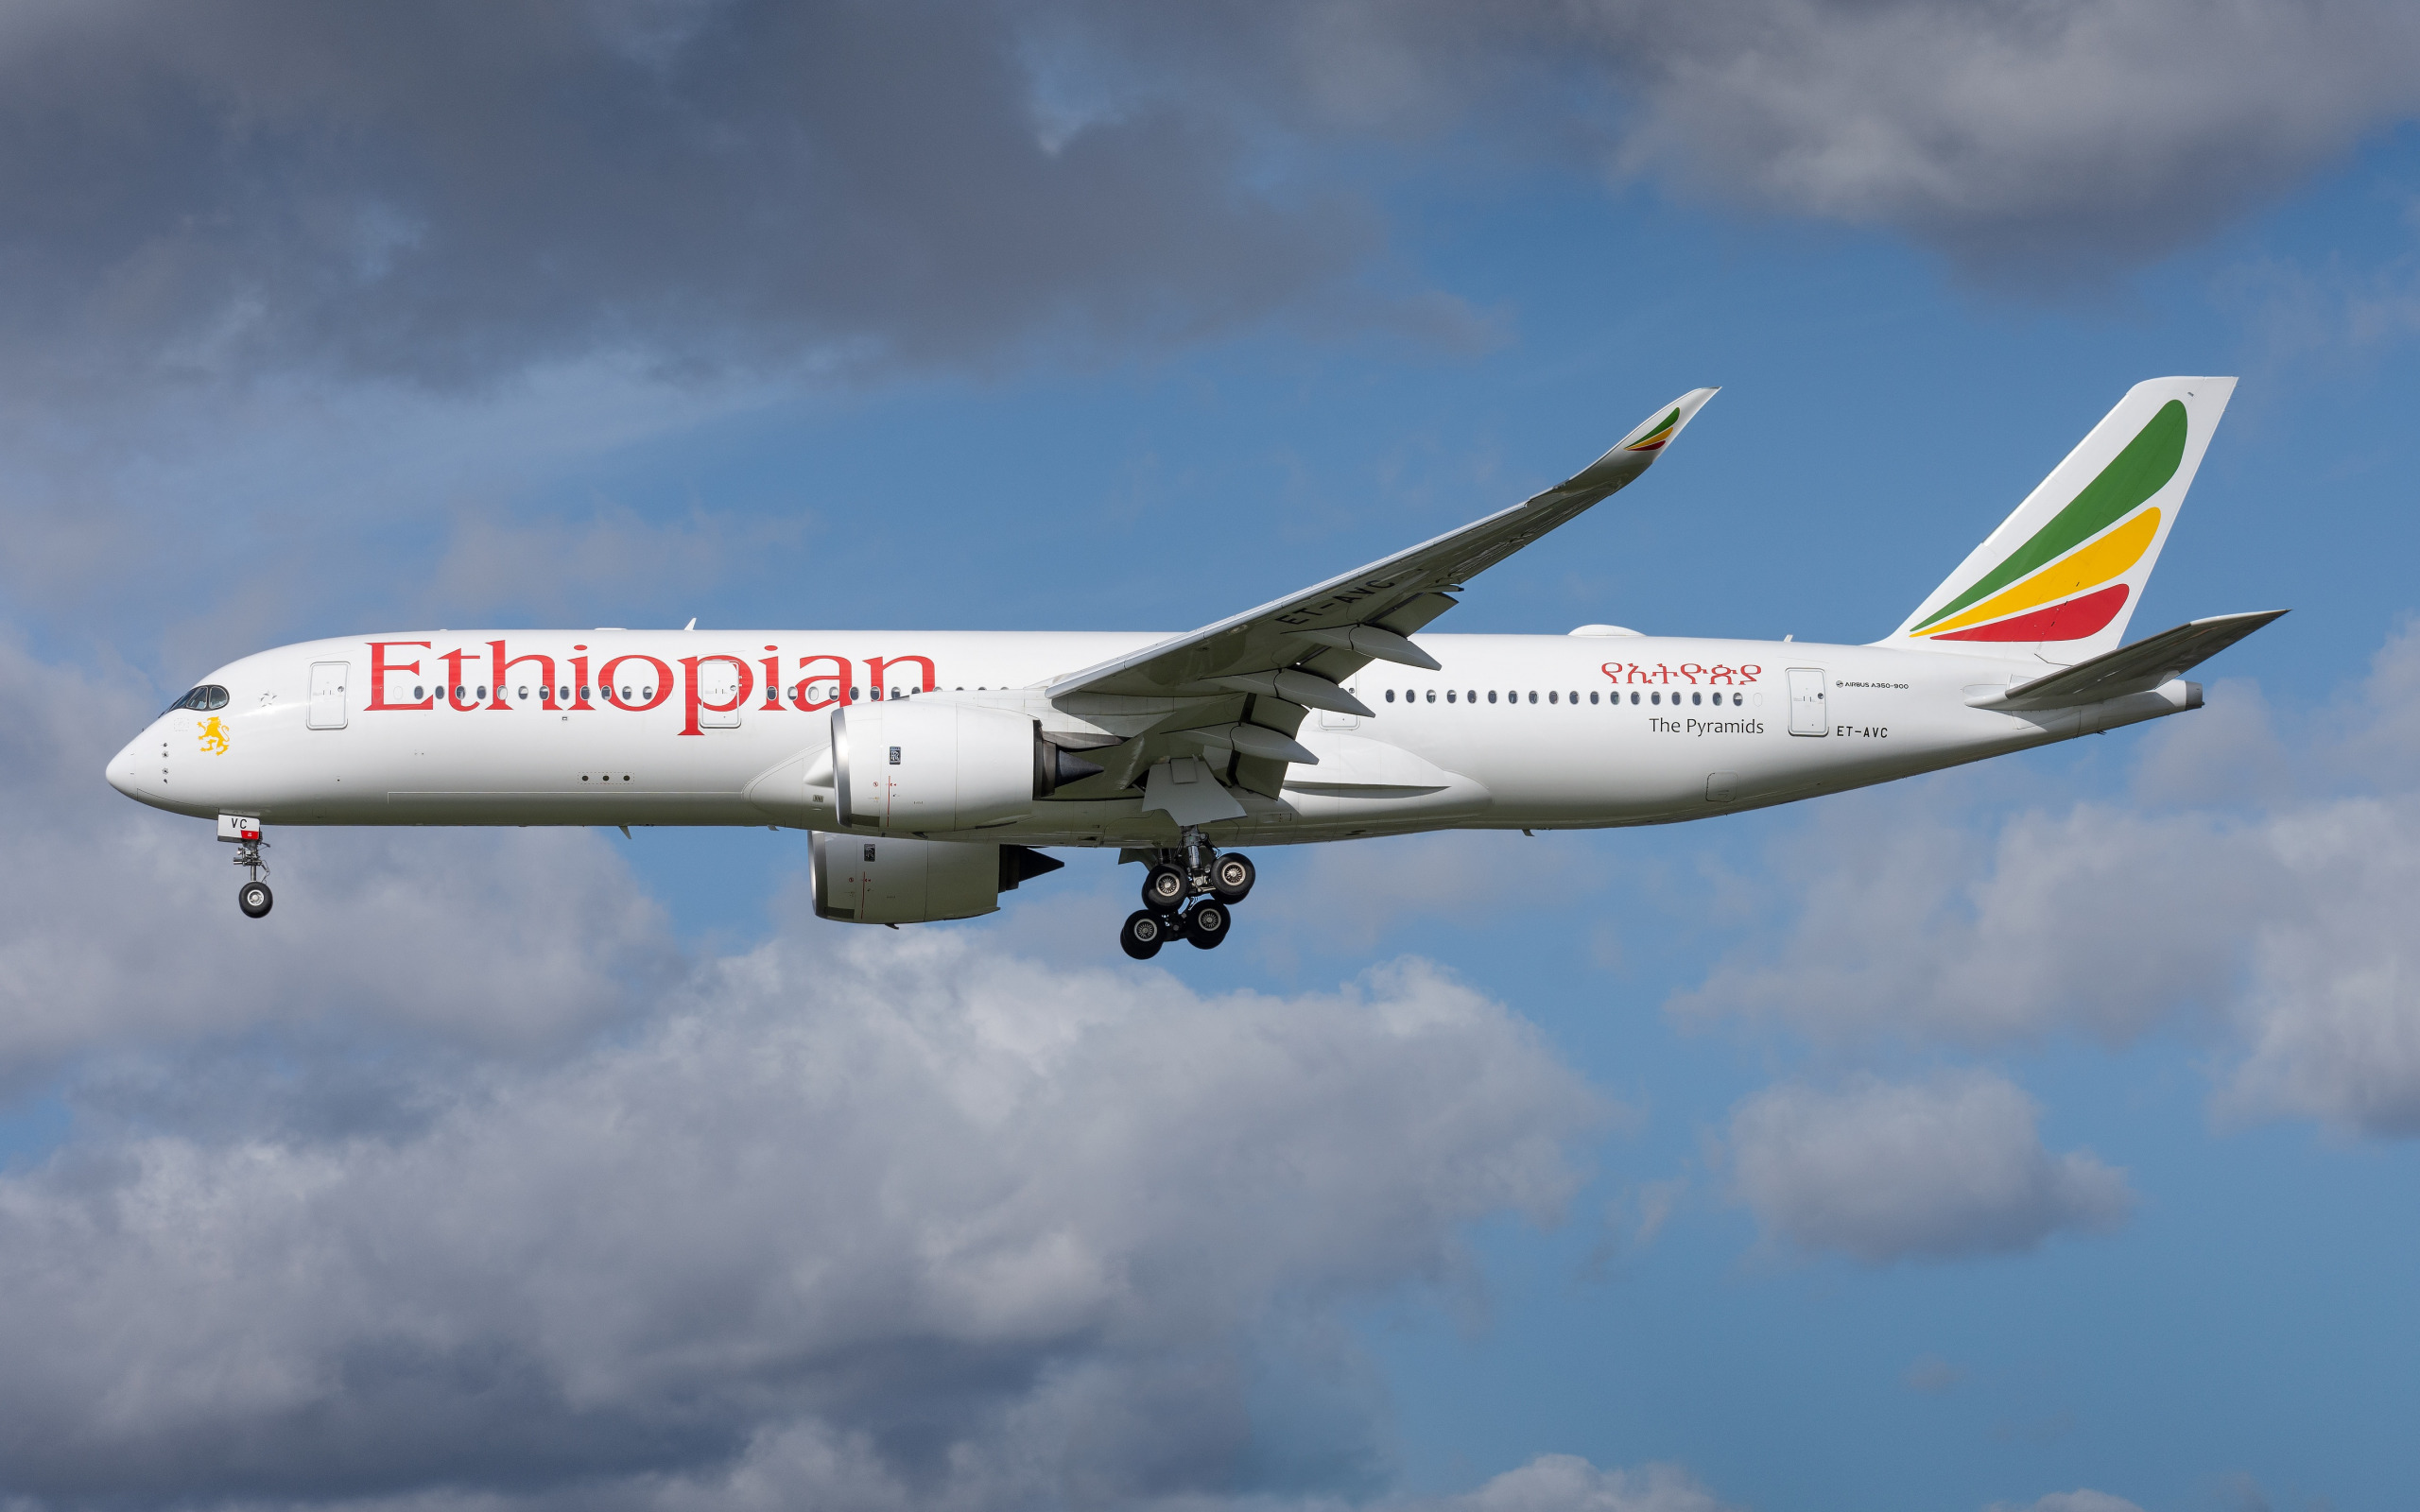 Airbus a350. А350 Аэрофлот. Самолеты Эфиопиан Эйрлайнс. Airbus a330 Аэрофлот. Ethiopian airlines отзывы